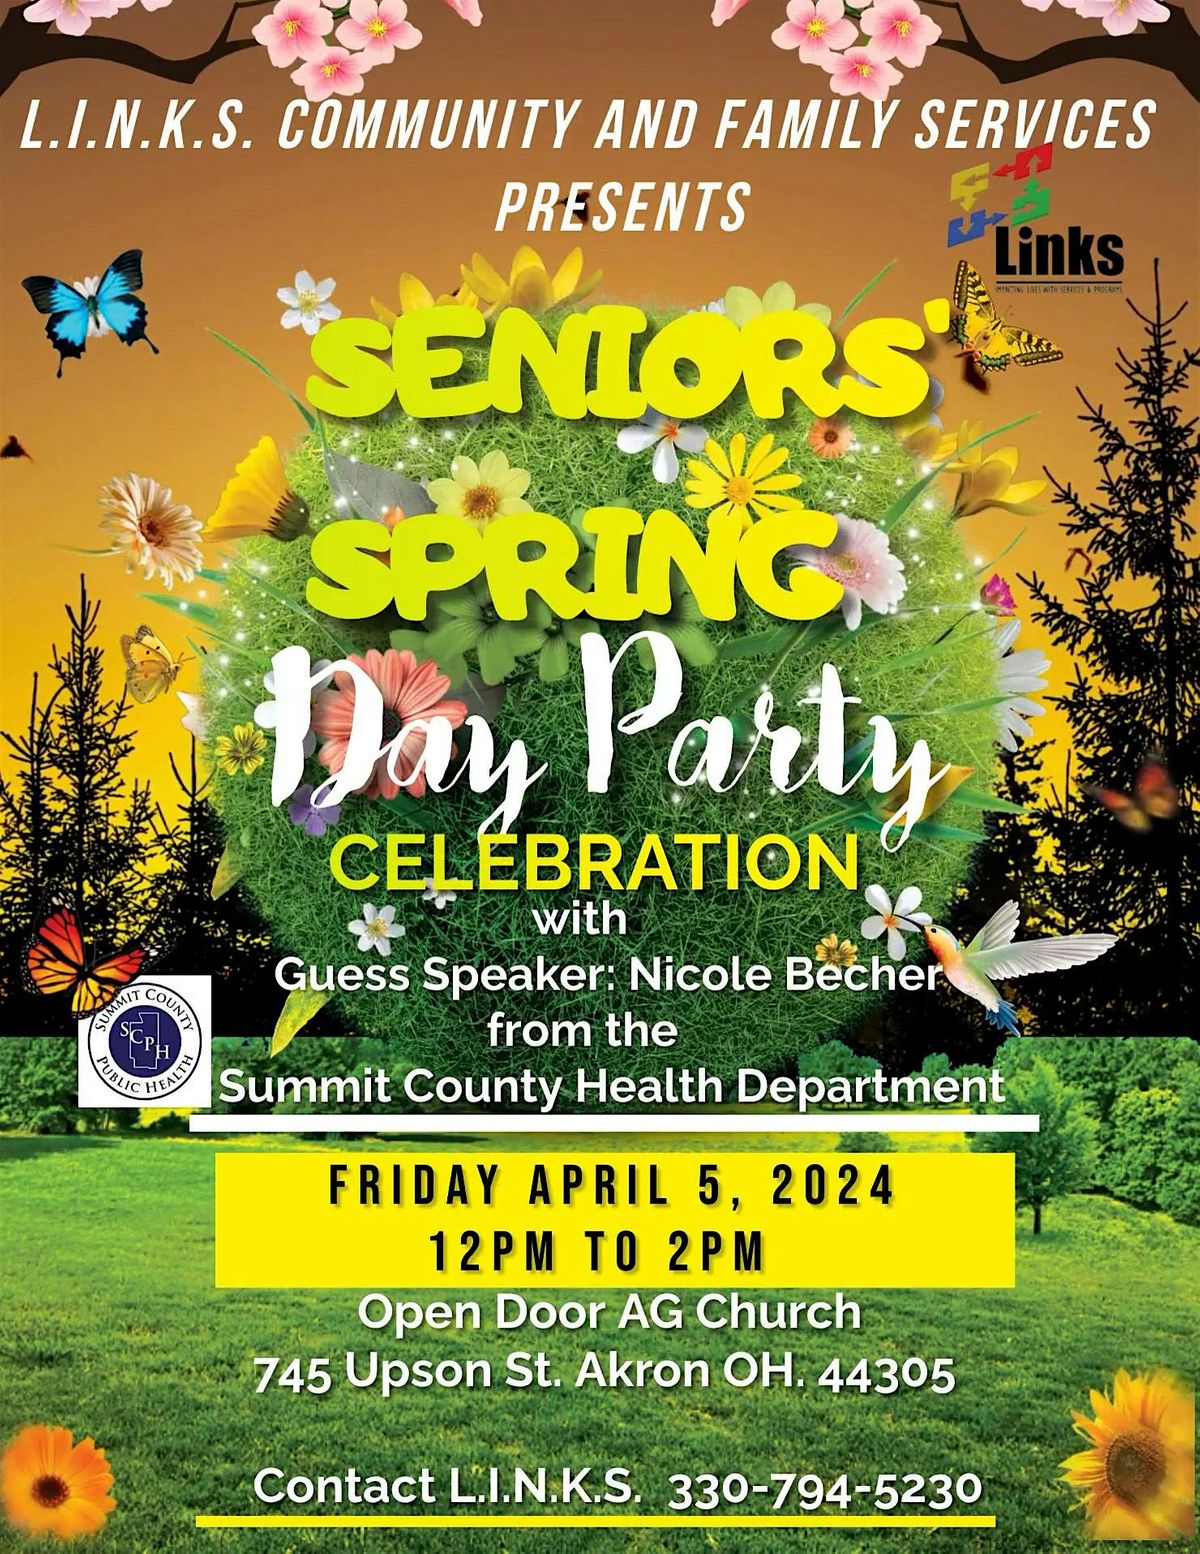 L.I.N.K.S. Seniors Spring Day Party